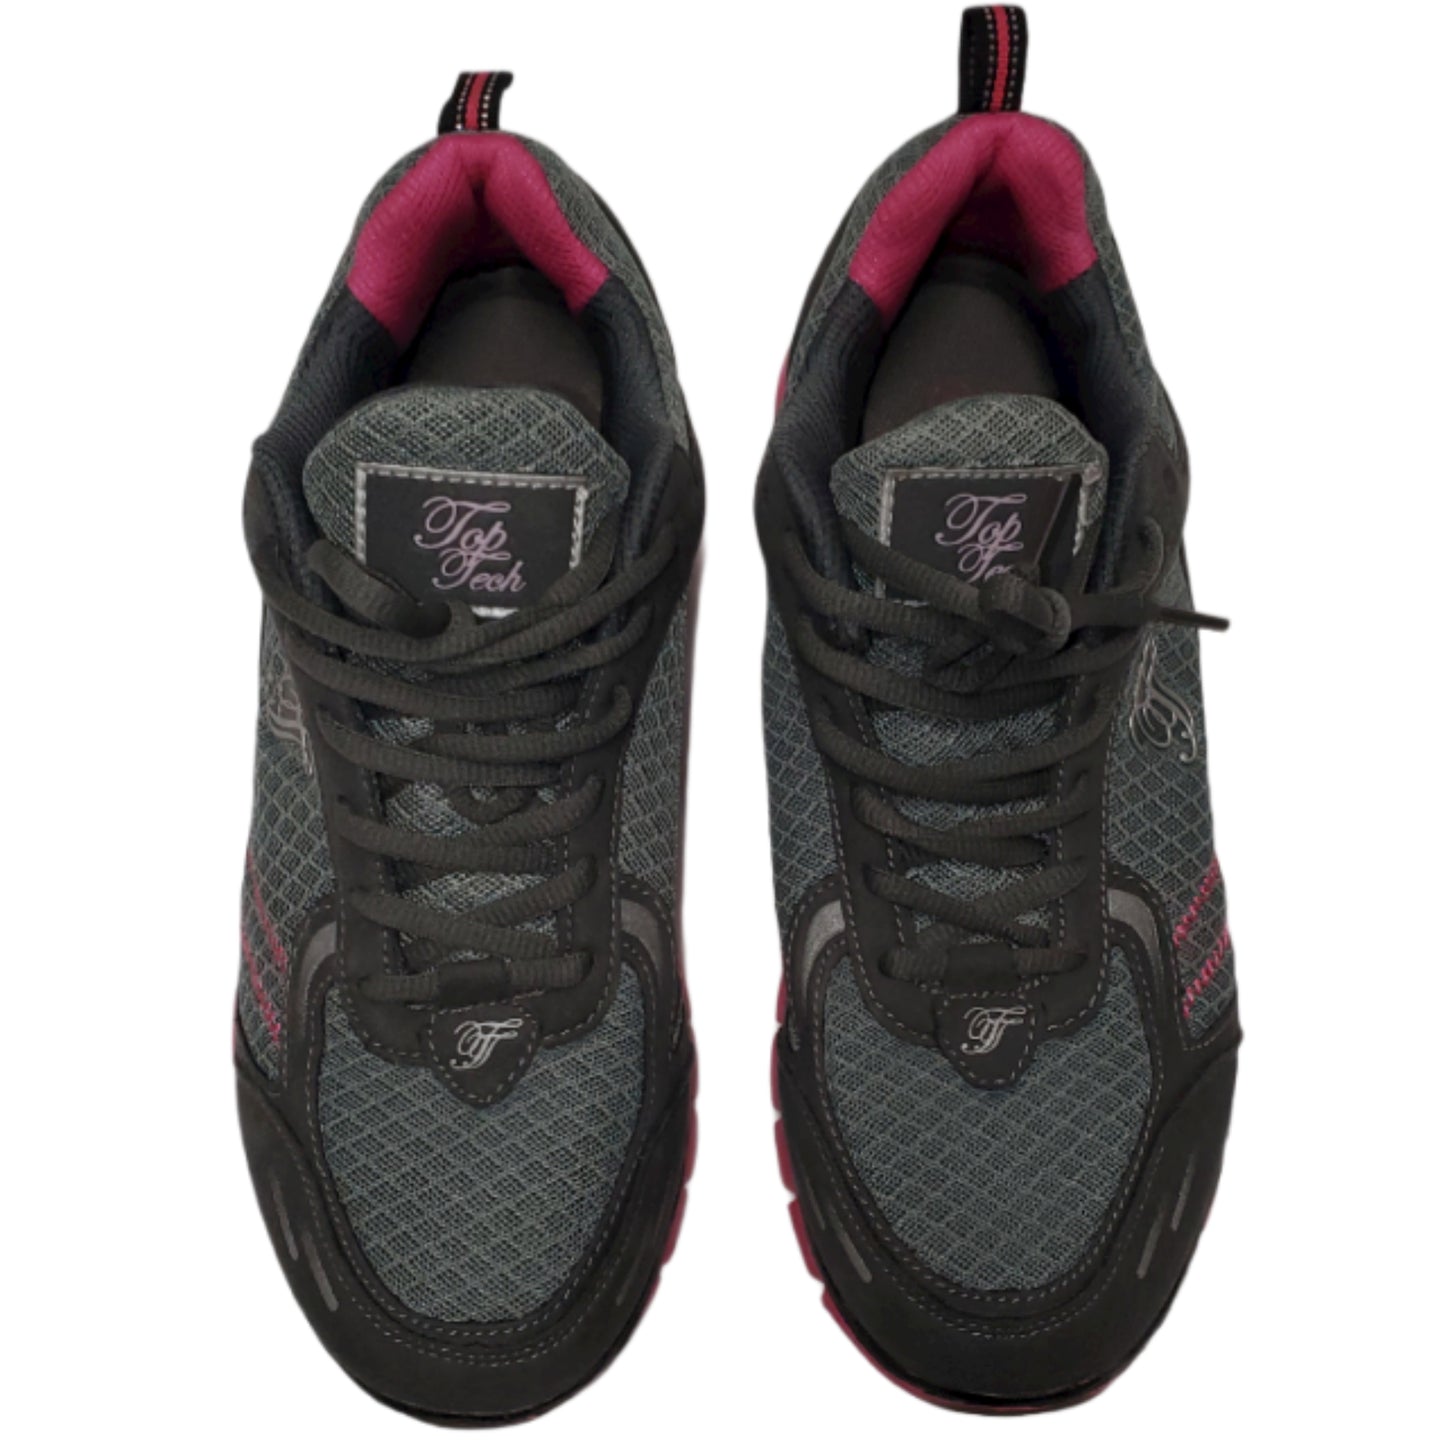 Top Tech Grey Pink Sneakers|Used